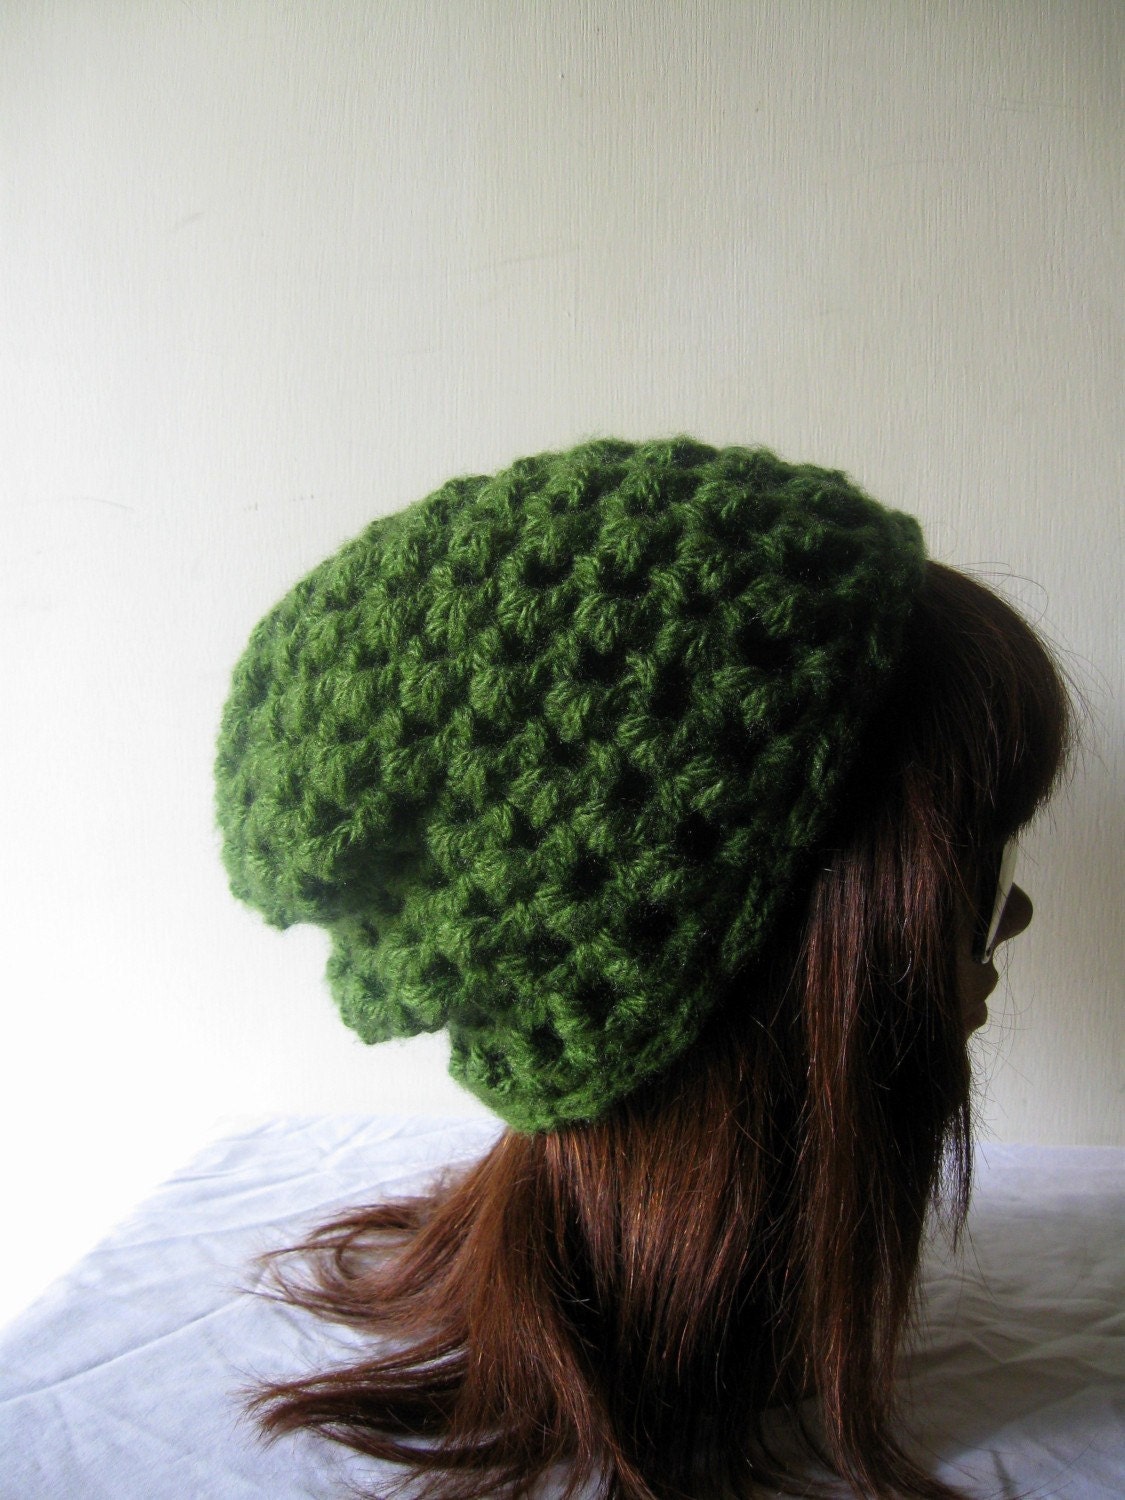 the slacker beanie hat in grass green.